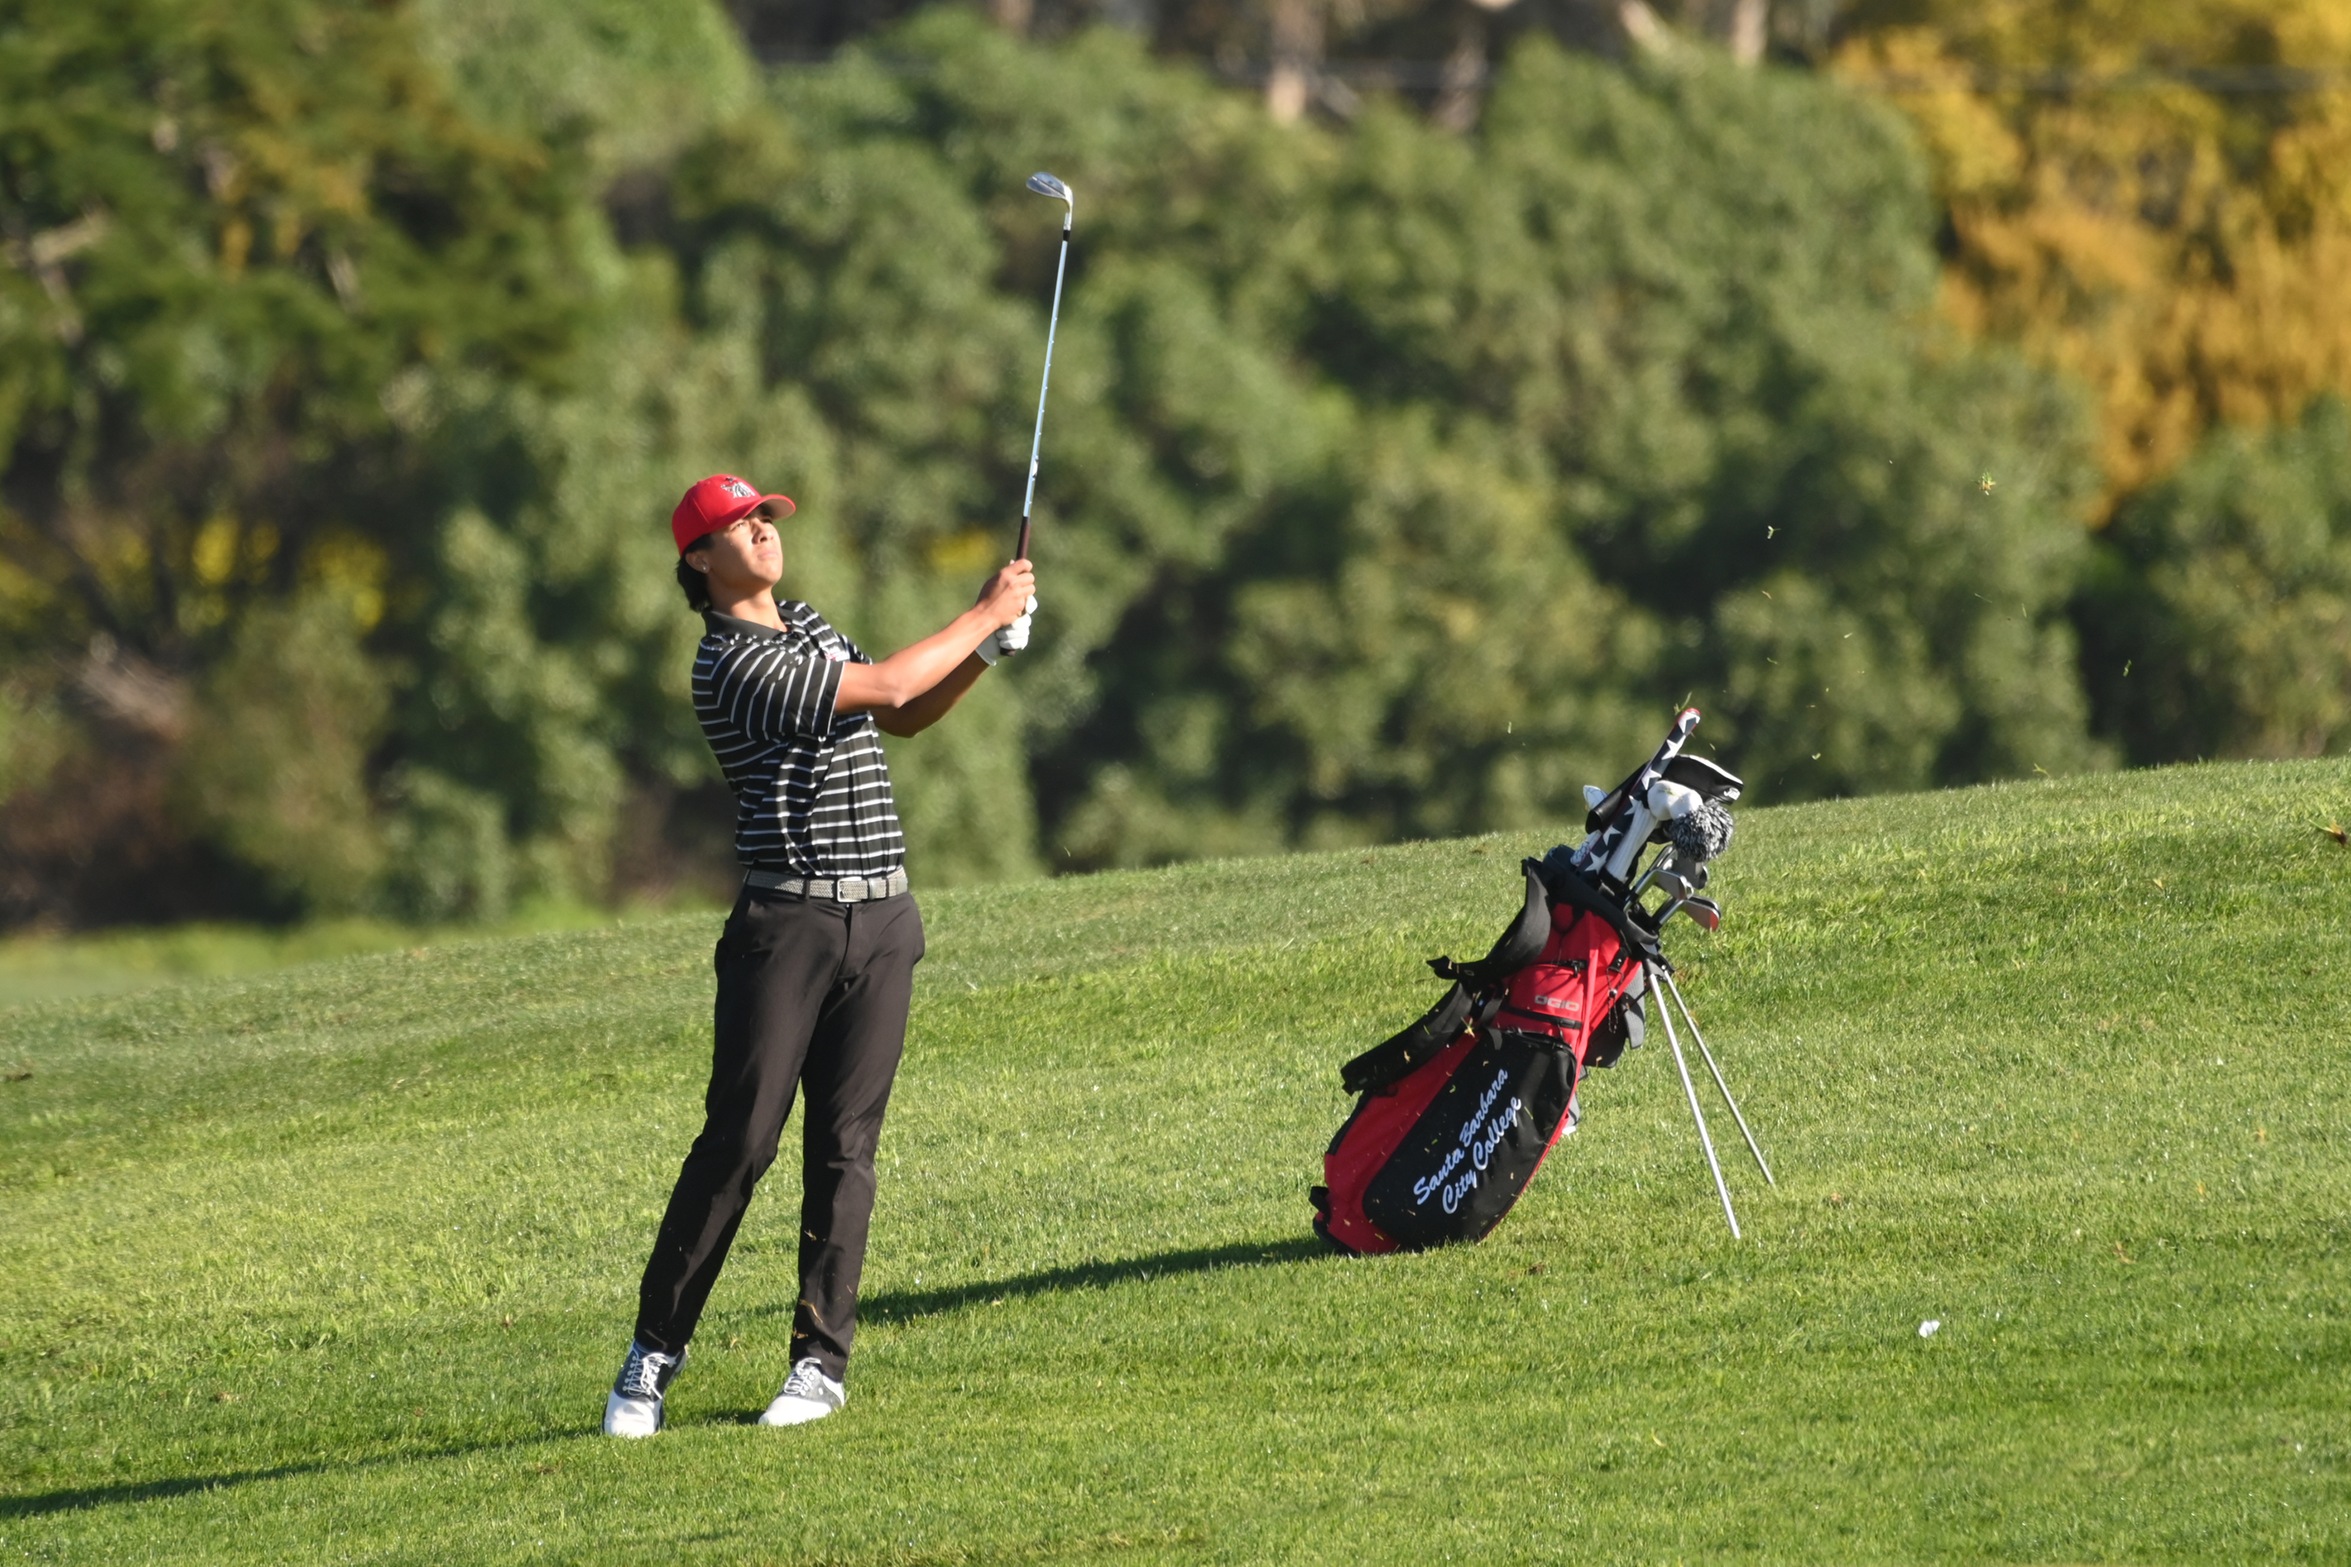 Rodriguez Hits 74 as Men's Golf Hosts 18 Teams at Breathtaking Sandpiper